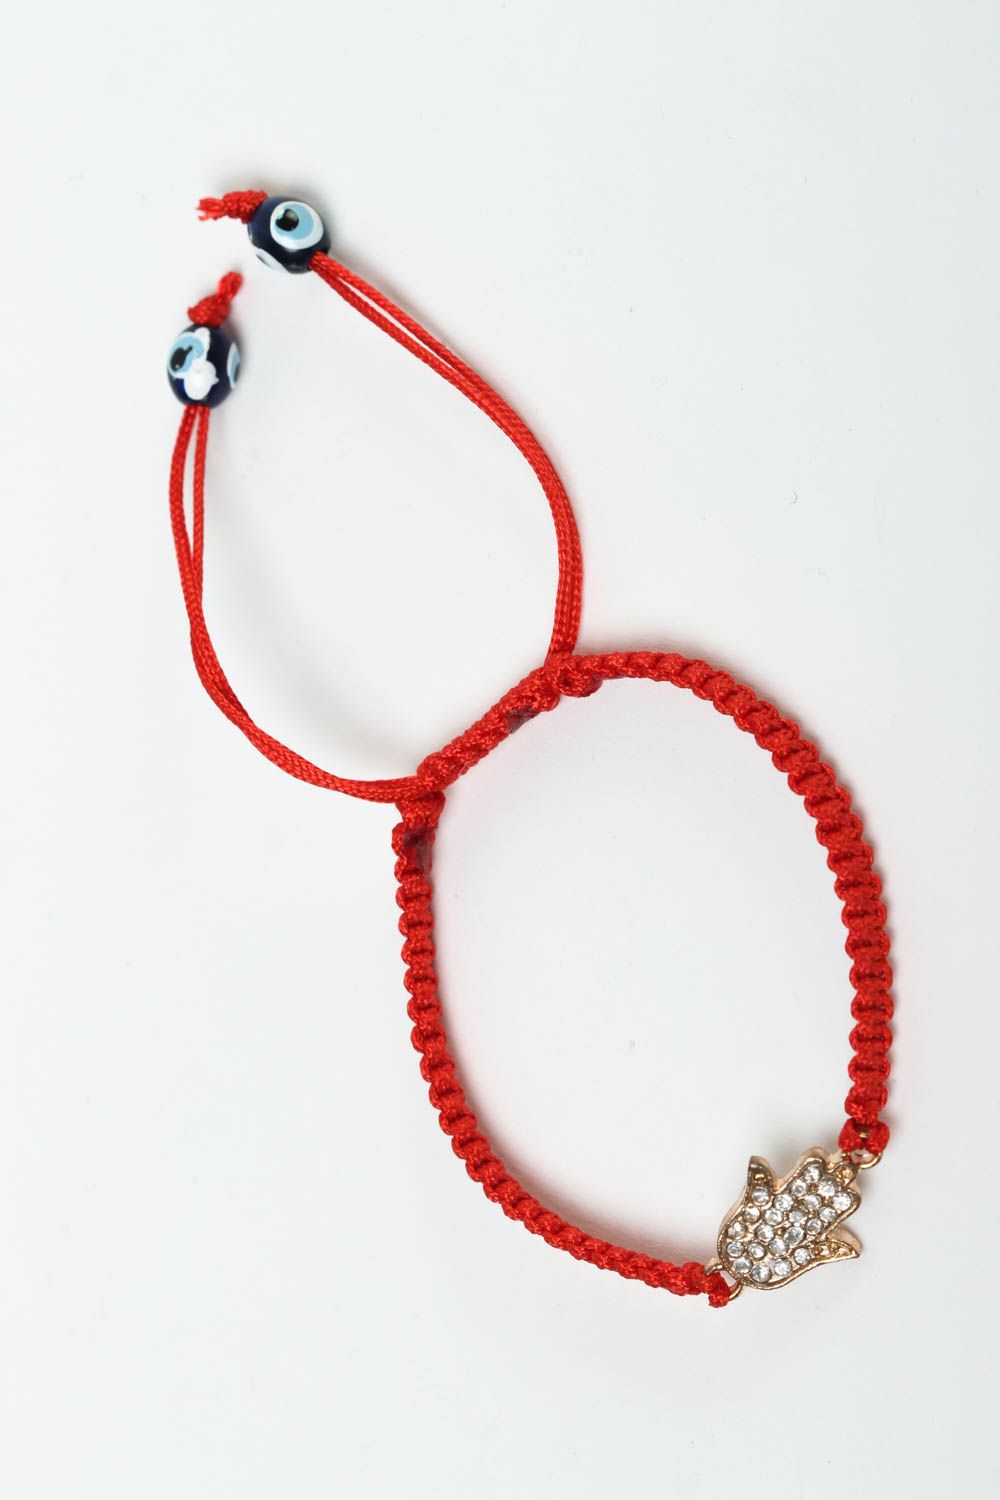 Designer Schmuck handmade Damen Accessoire stilvoll geflochtenes Armband rot foto 2